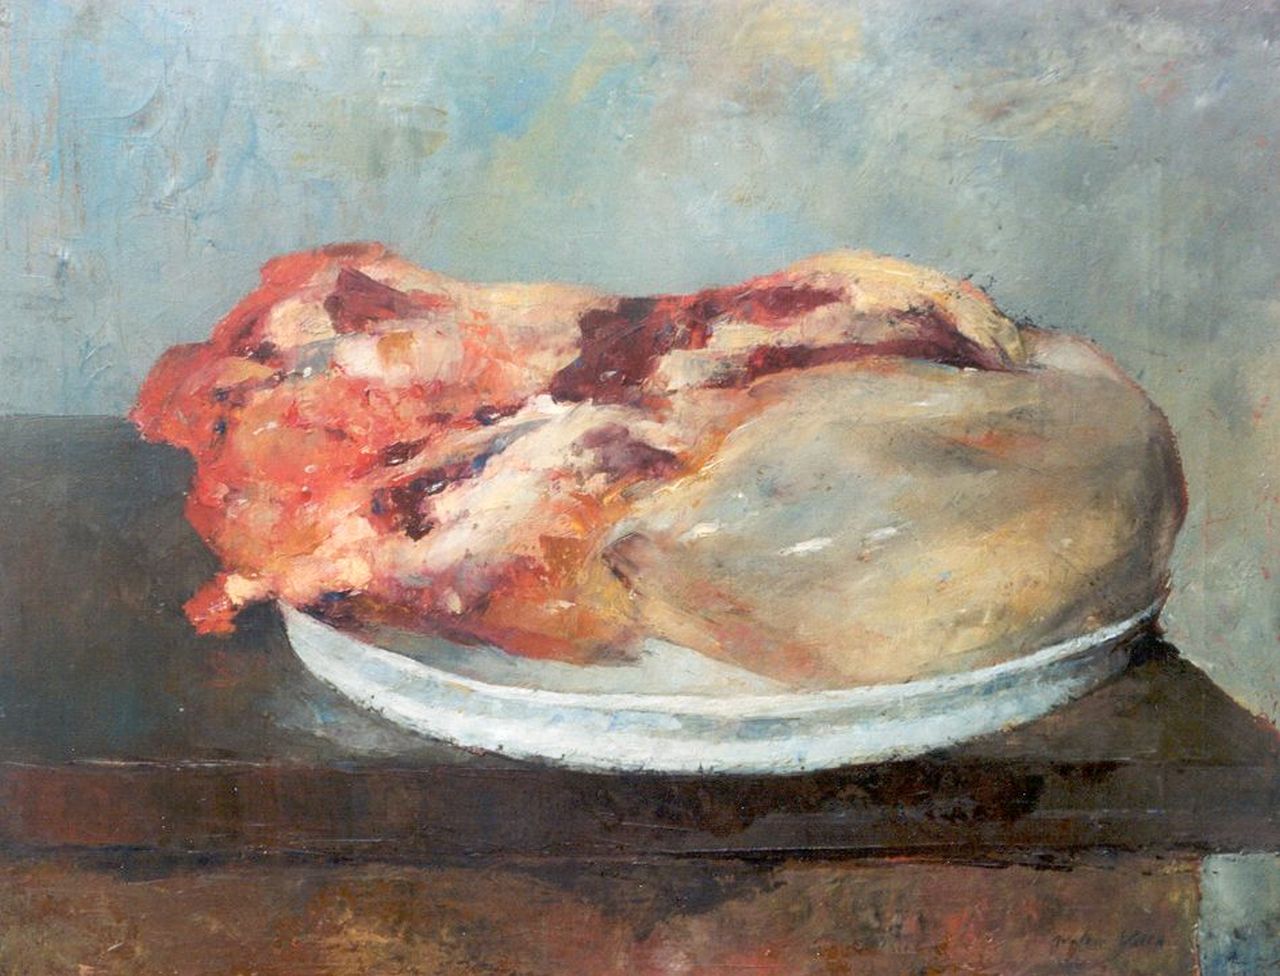 Vaes W.  | Walter Vaes, Braising steak, Öl auf Leinwand 40,3 x 50,4 cm, signed l.r.